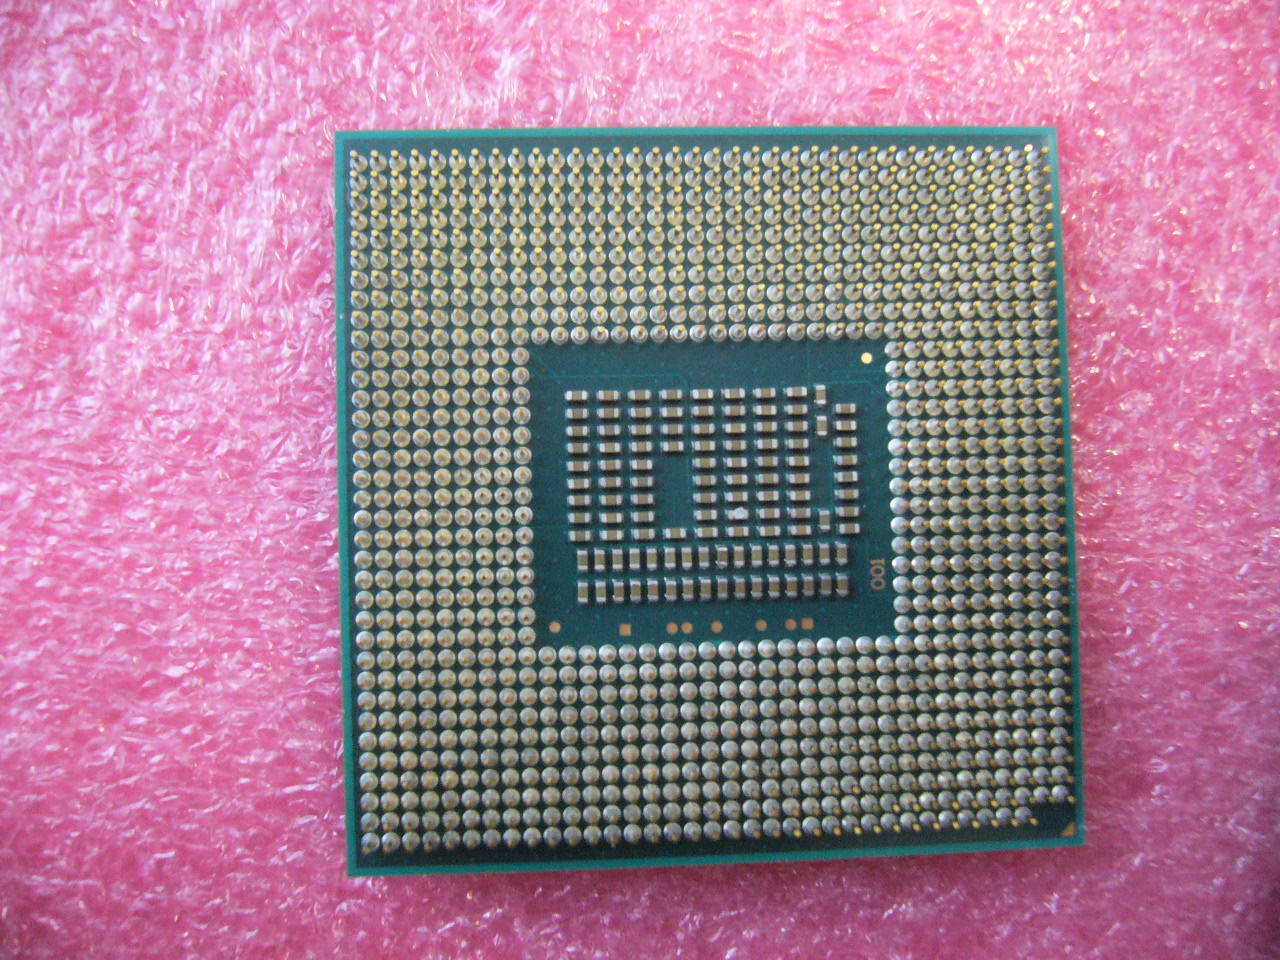 QTY 1x Intel CPU i5-3320M Dual-Core 2.6 Ghz PGA988 SR0MX Socket G2 04W4137 - Click Image to Close